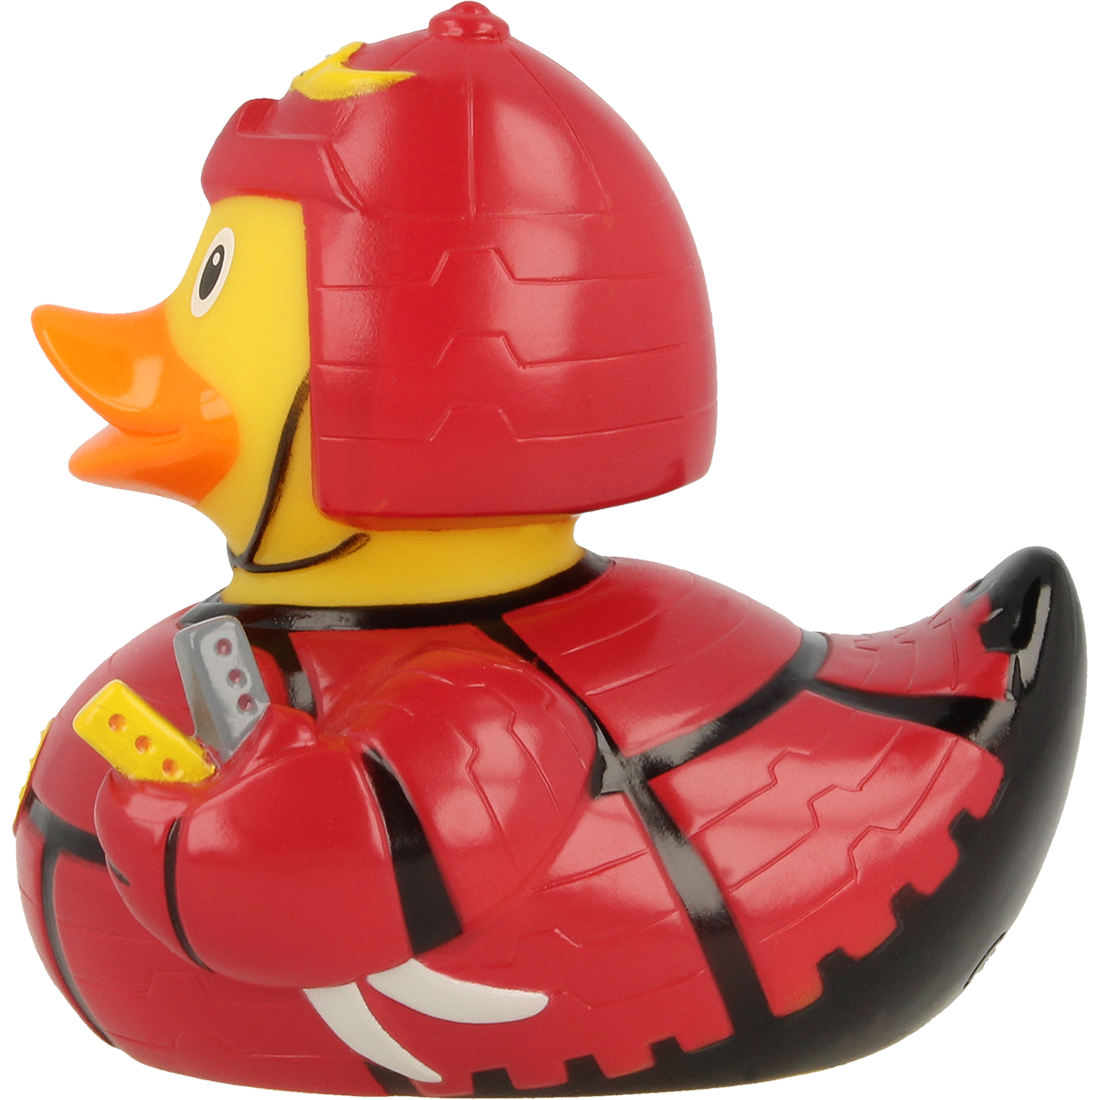 Samurai duck